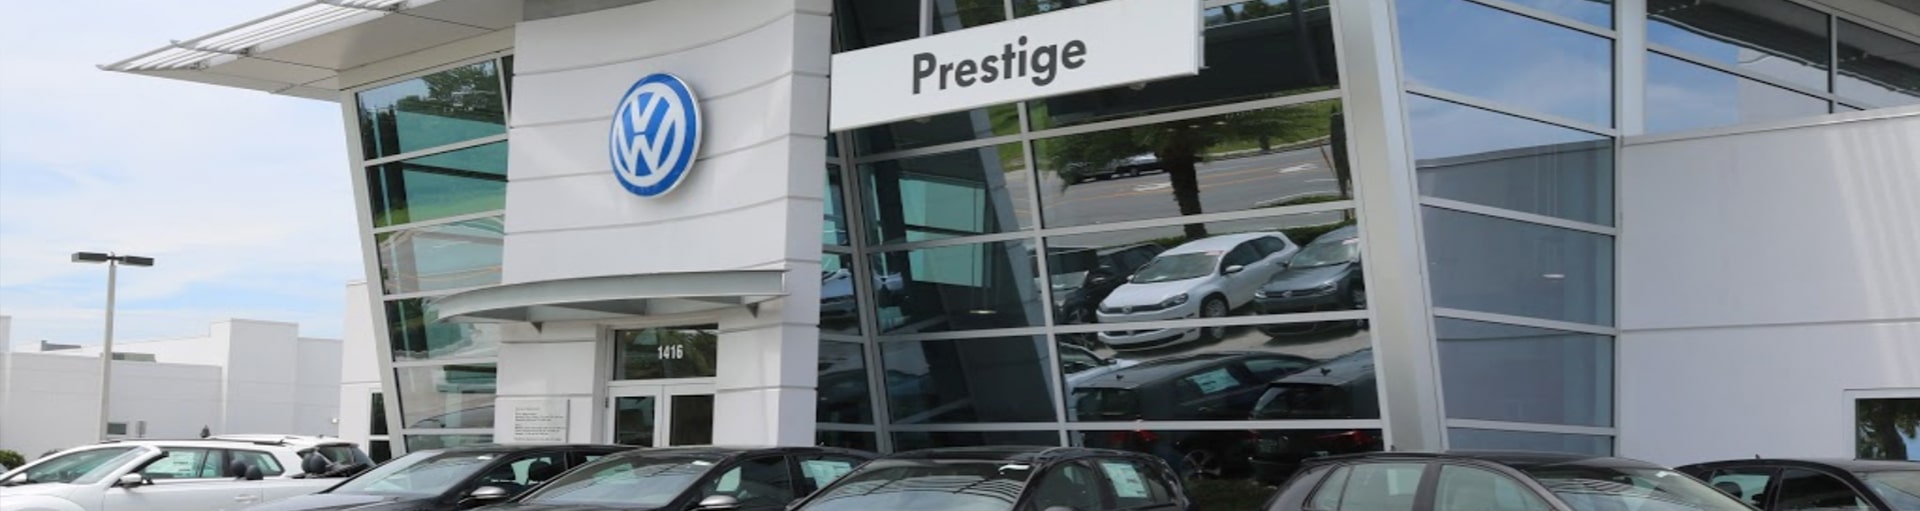 Prestige Volkswagen of Melbourne Tire Rotation Service